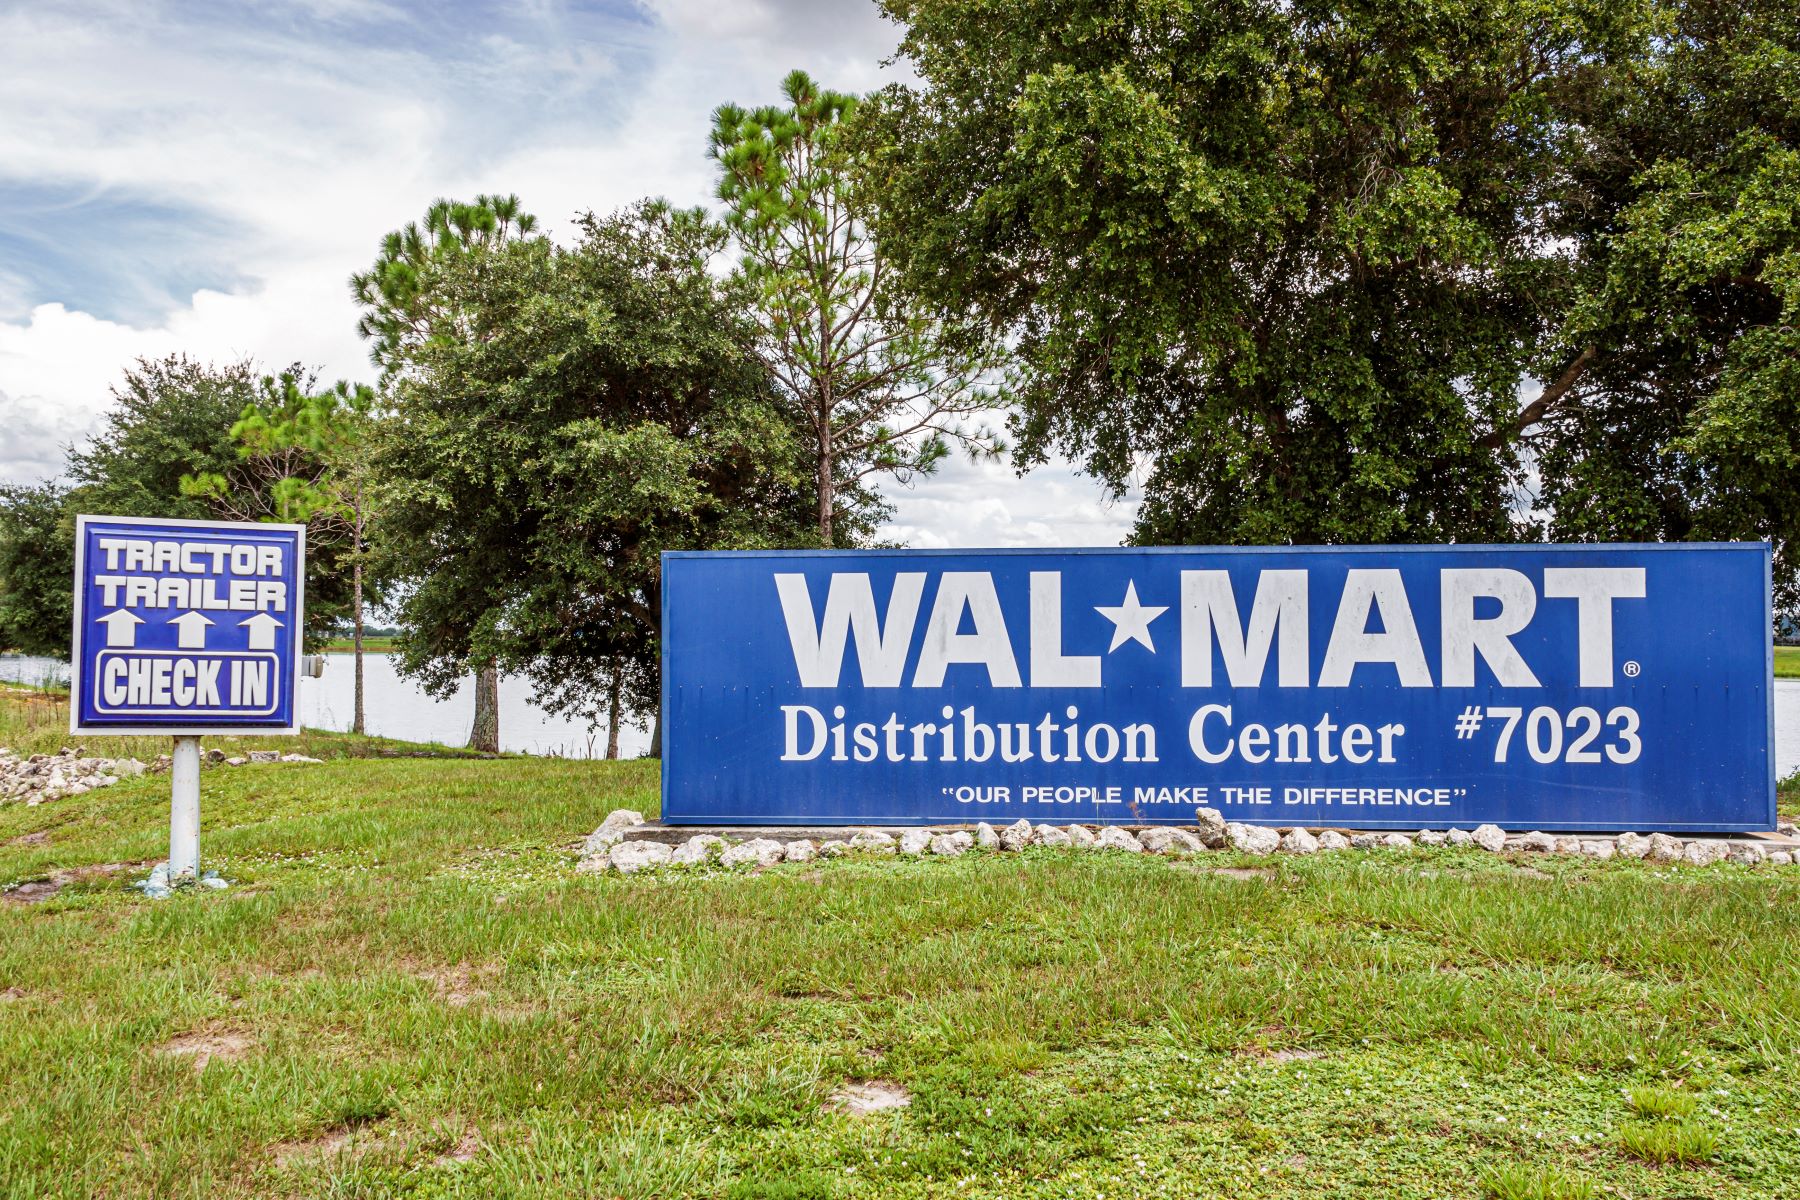 A Walmart distribution center in Arcadia, Florida